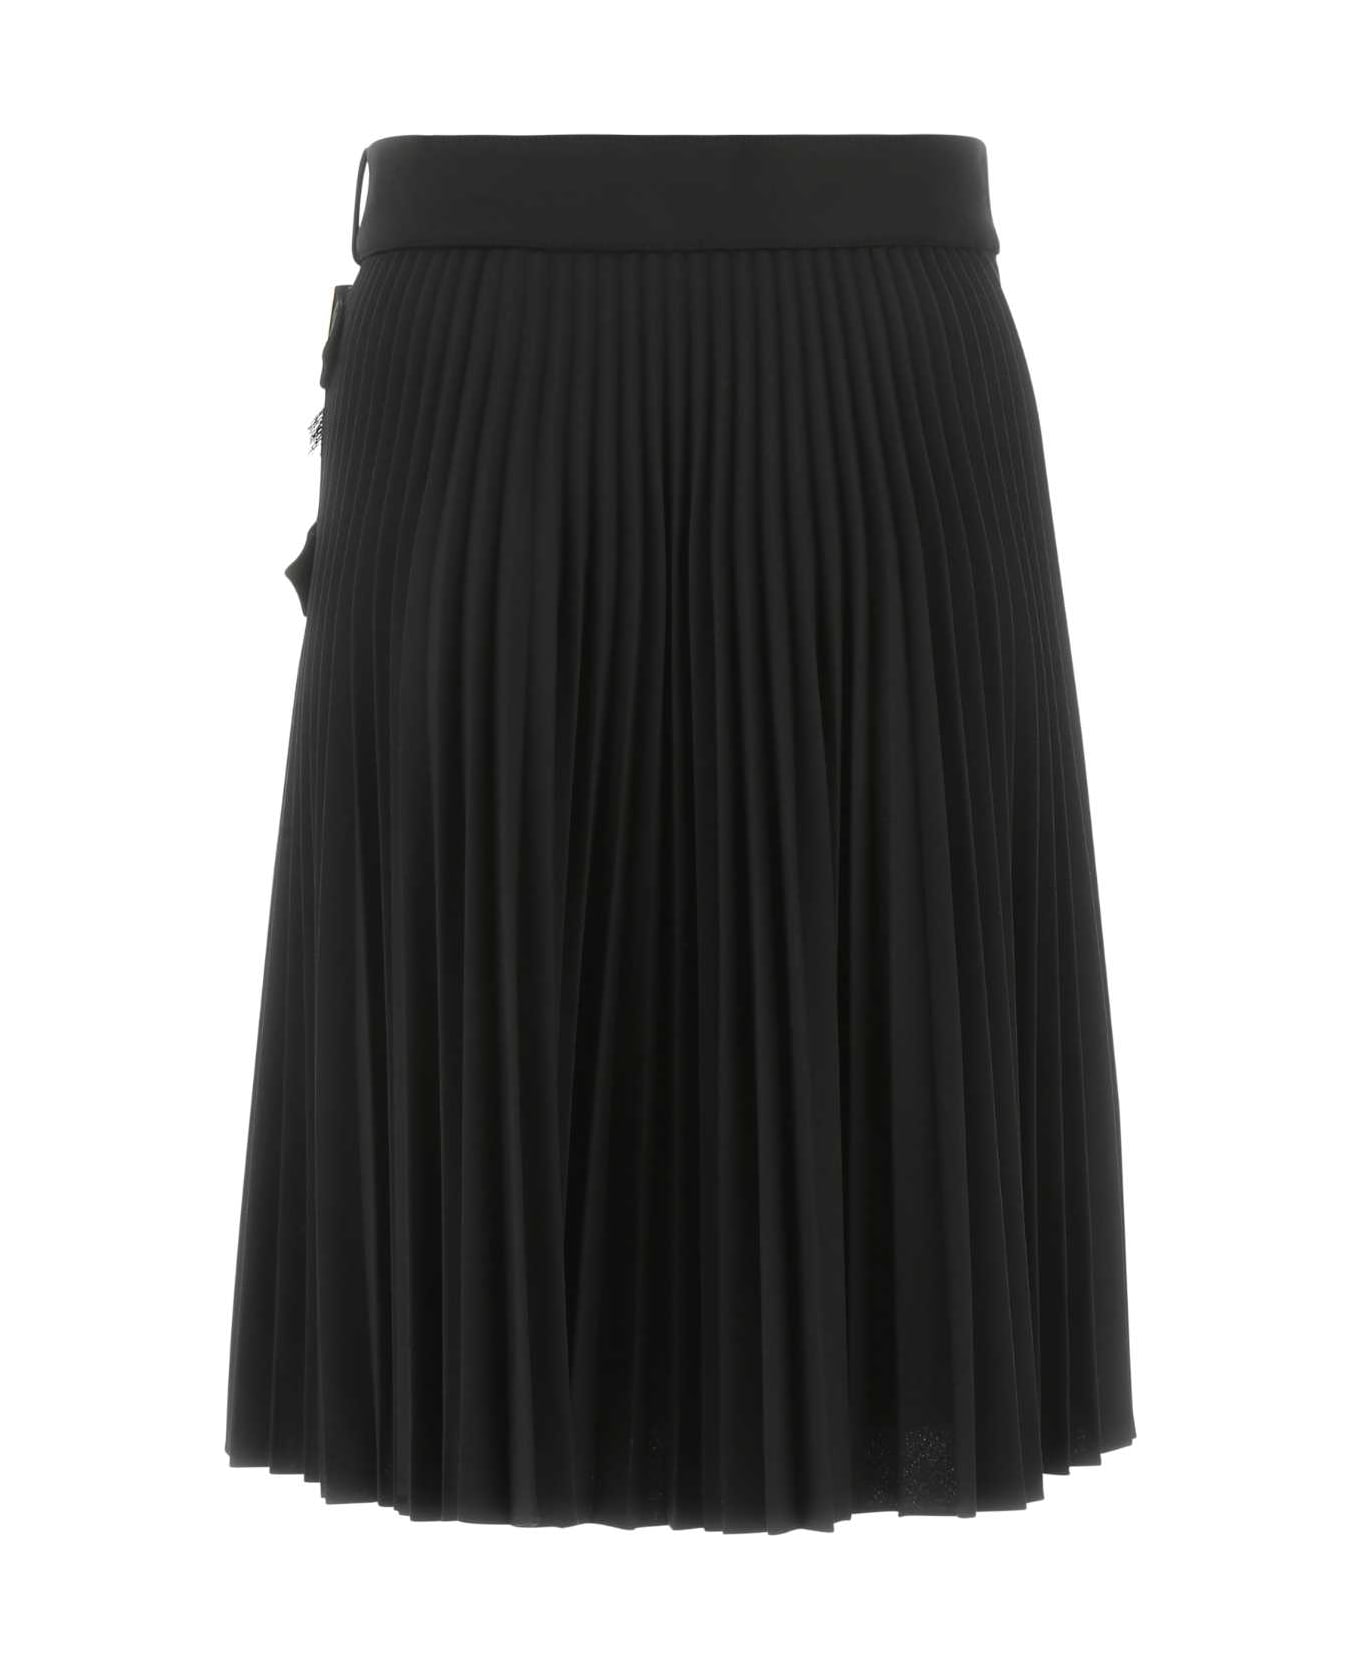 Burberry Black Stretch Polyester Blend Skirt - A1189